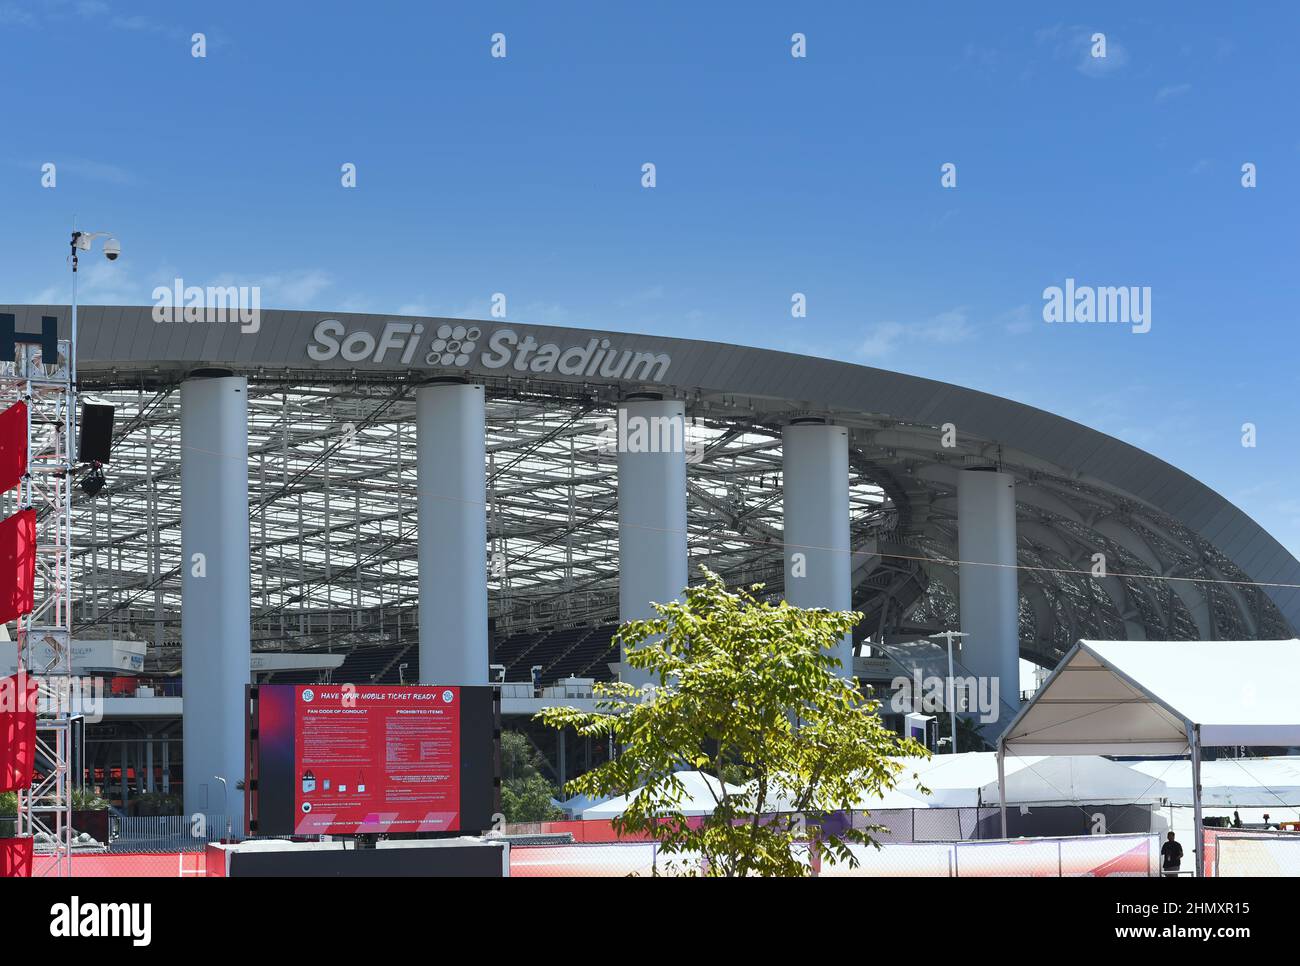 Sofi stadium hi-res stock photography and images - Alamy